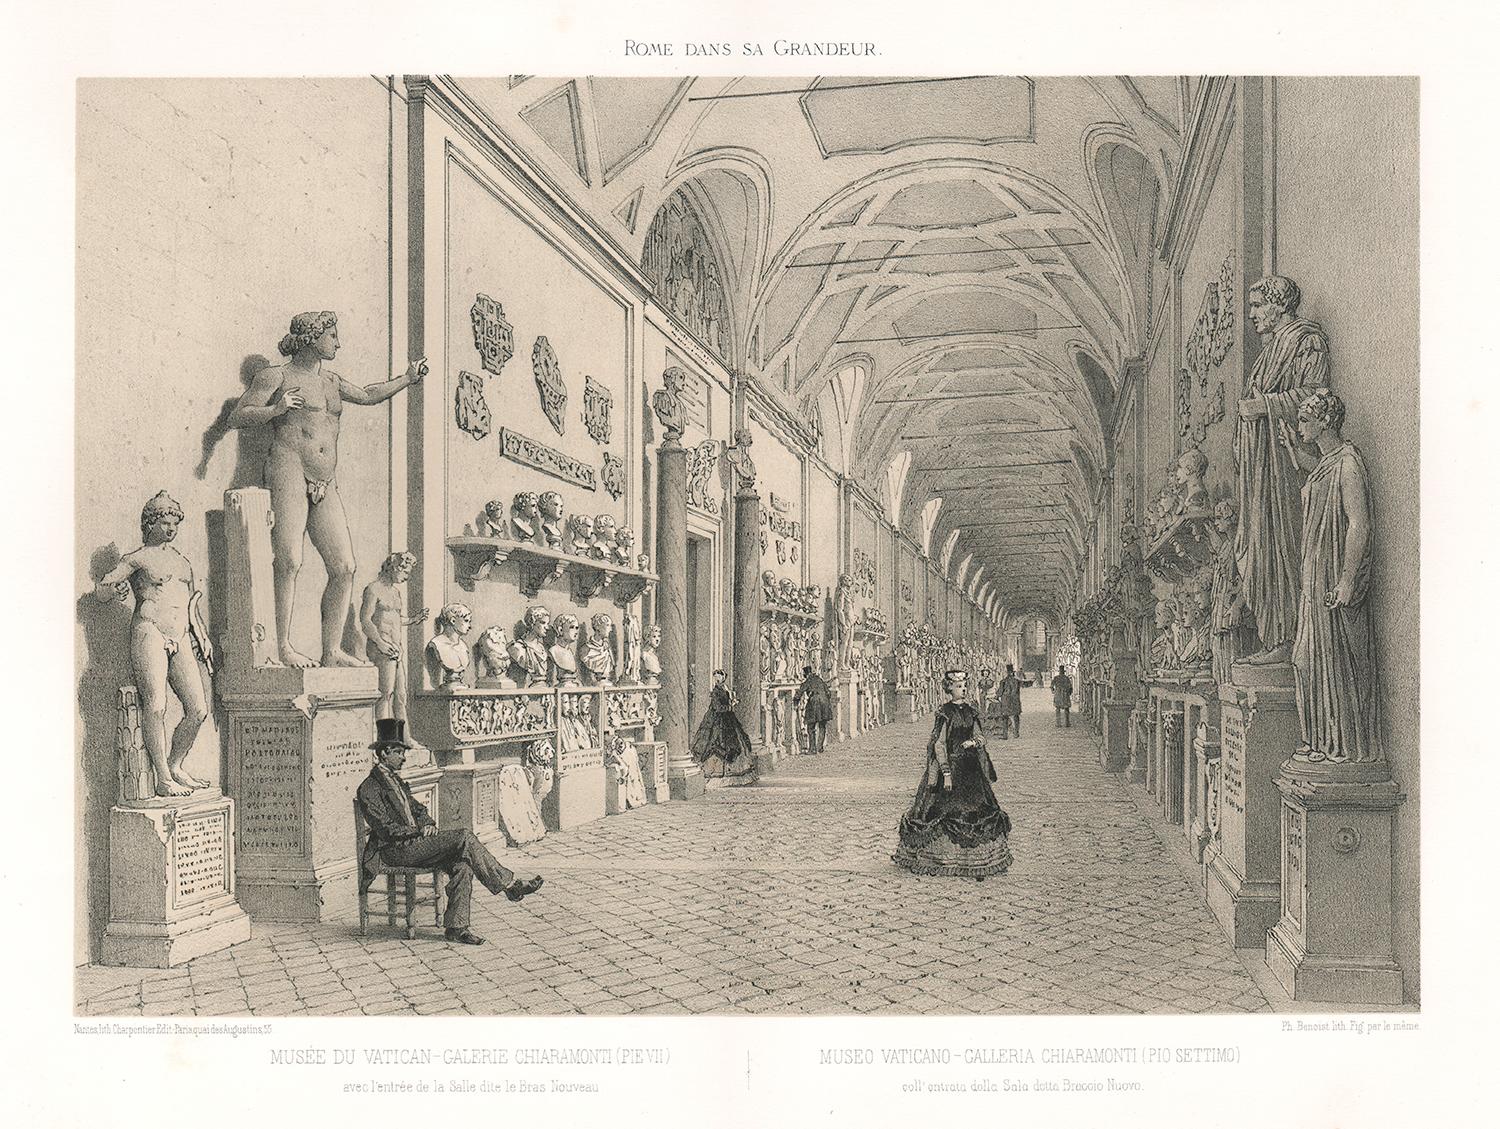 Galerie Chiaramonti, Vatican, Rome, Italy. Classical sculpture. Lithograph, 1870